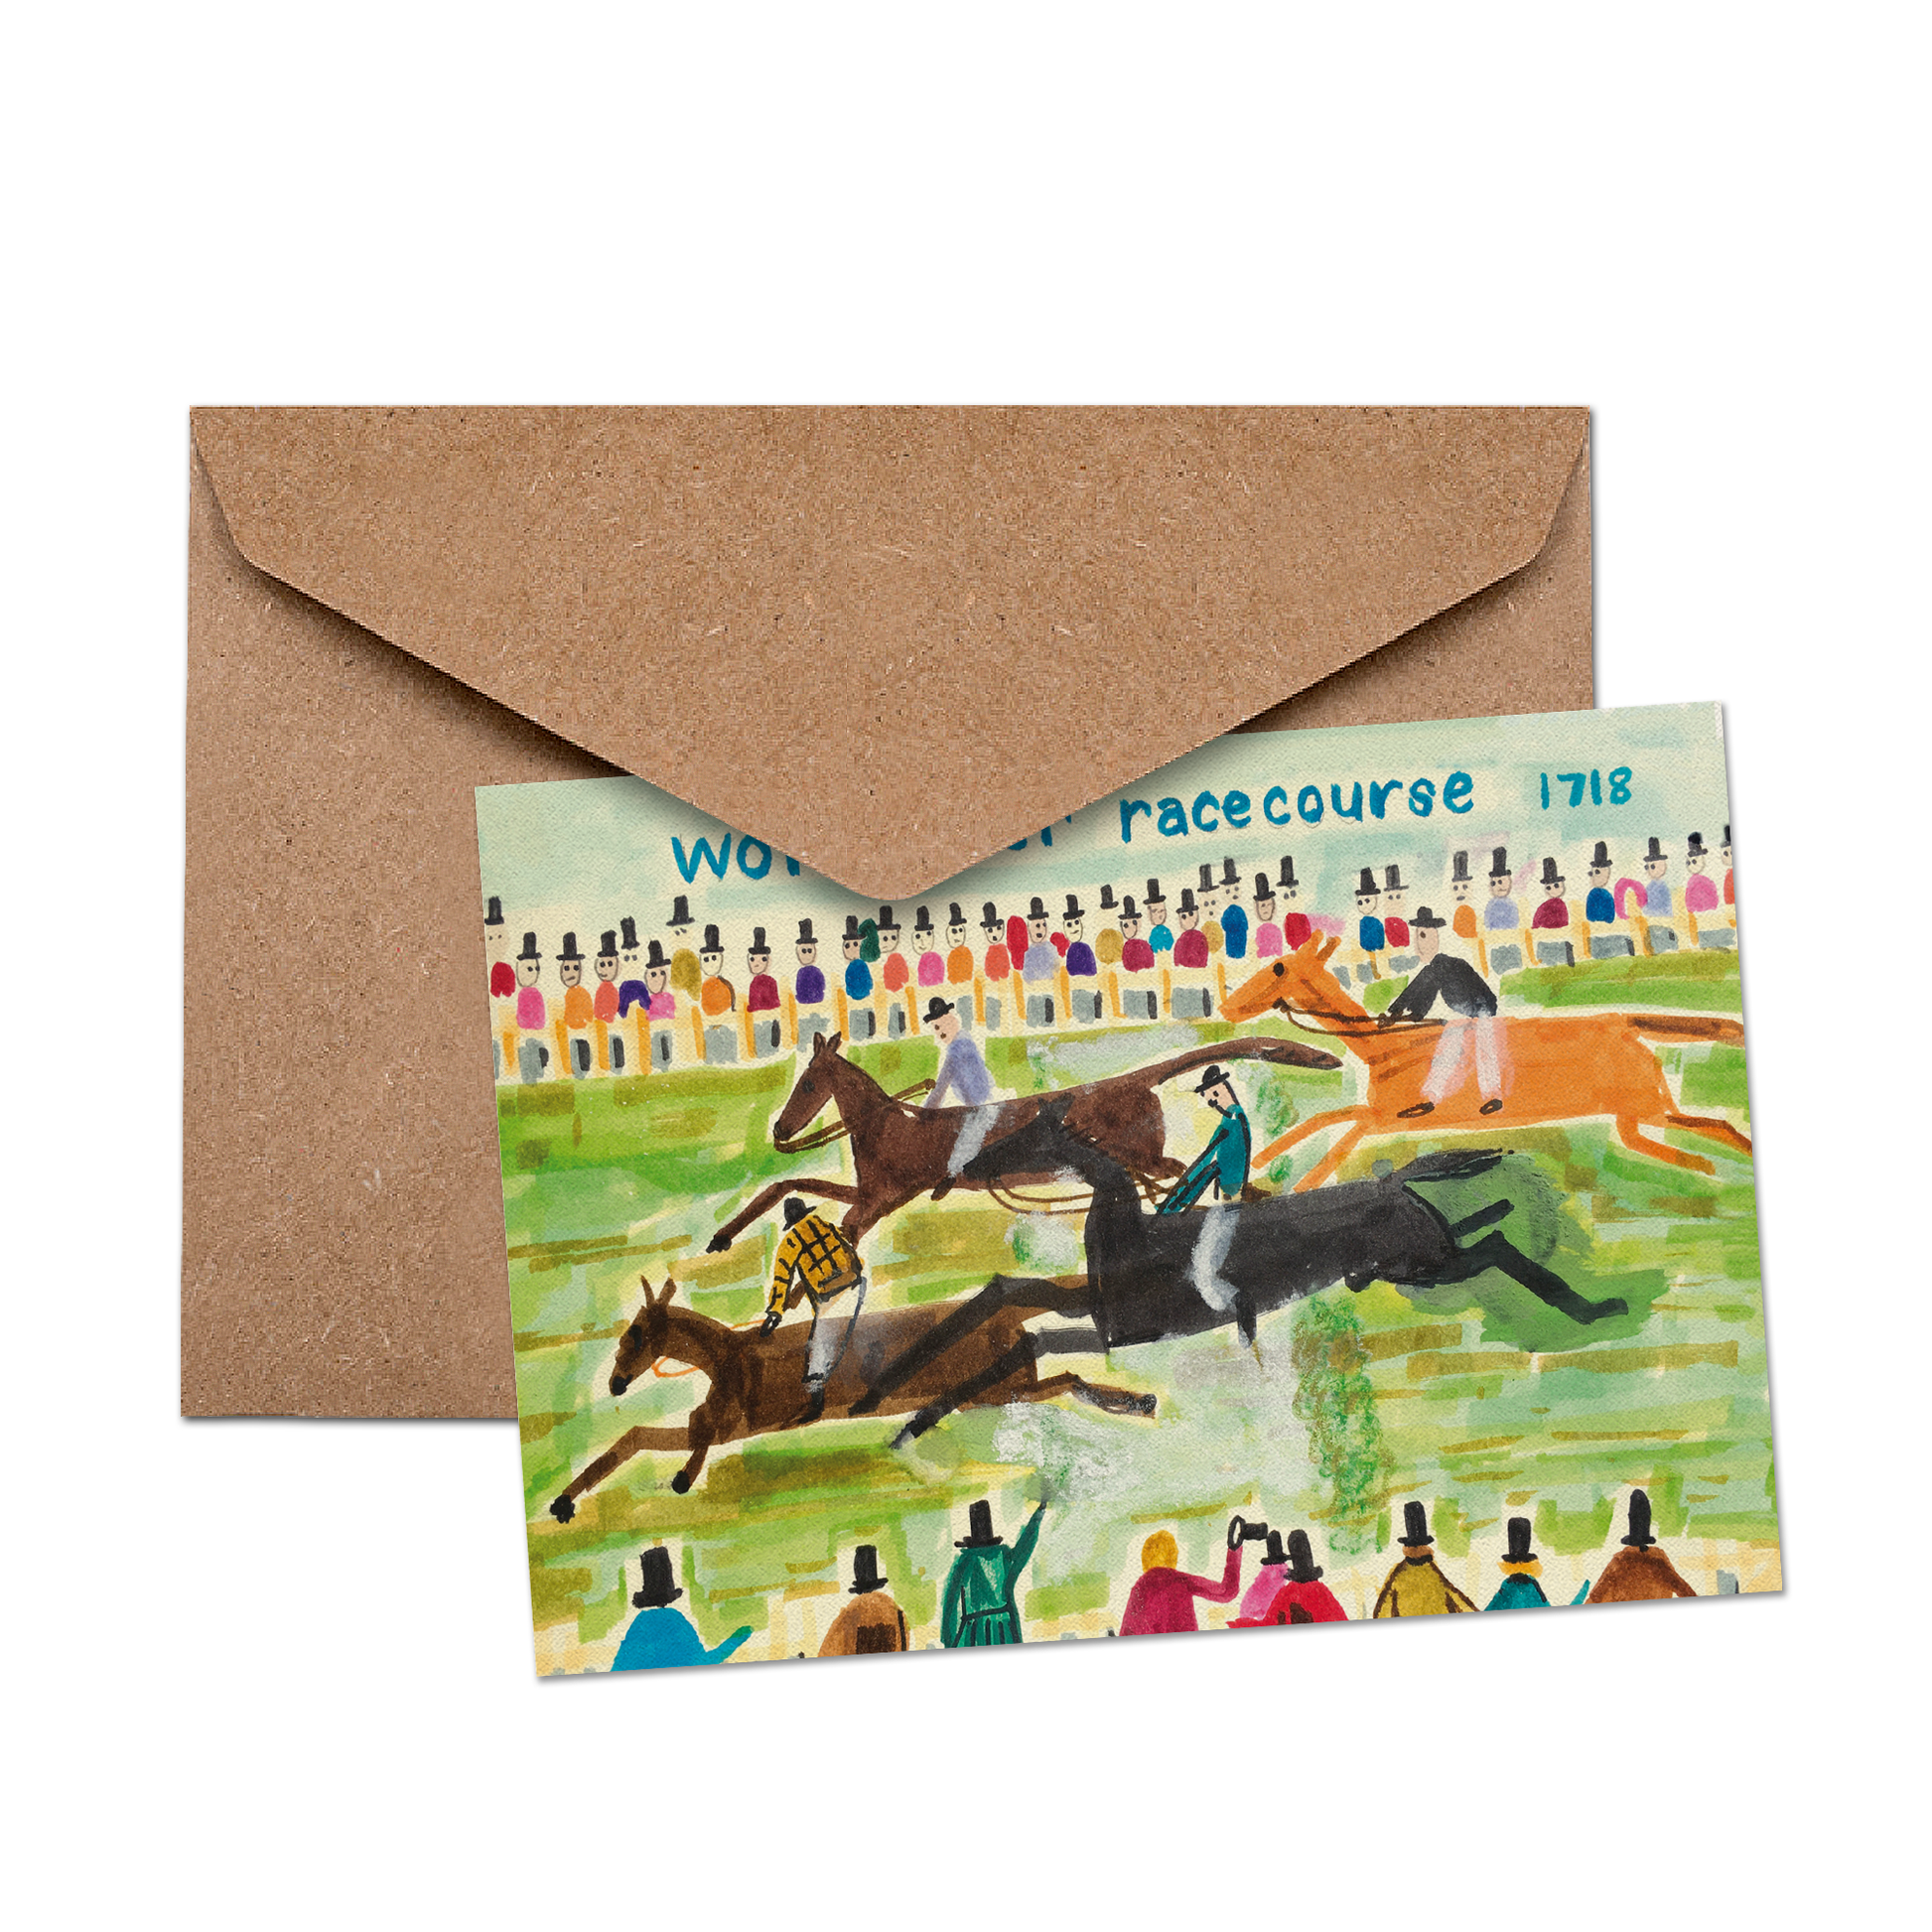 worcester racecourse 1718 greetings card - Greetings Card - Sarah Millin